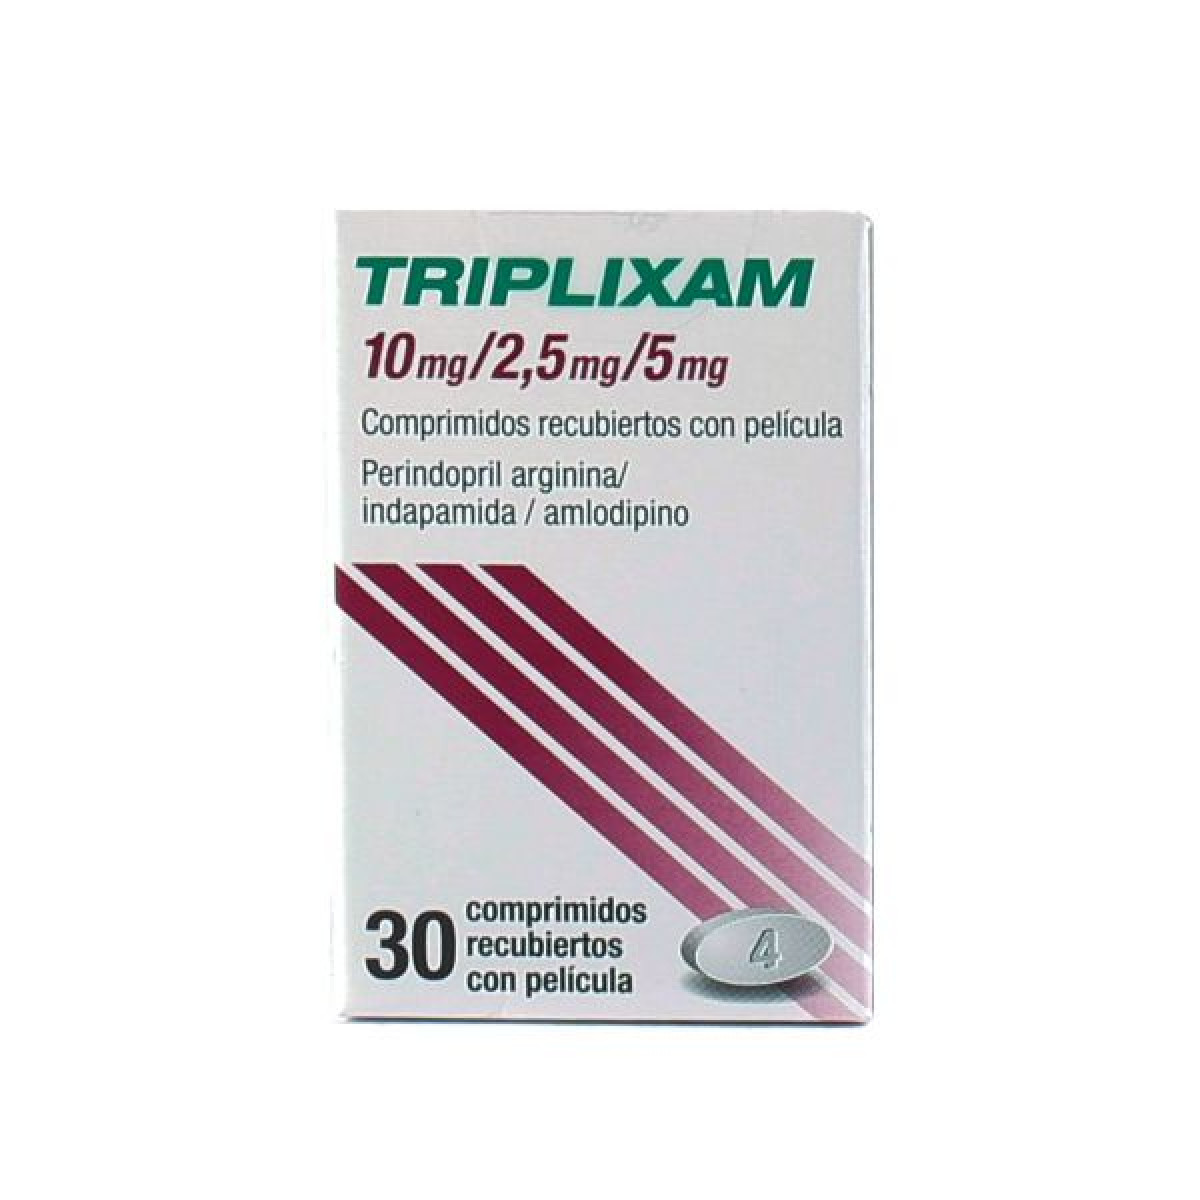 TRIPLIXAM 10/2.5/5MG X 30 COMP RECU